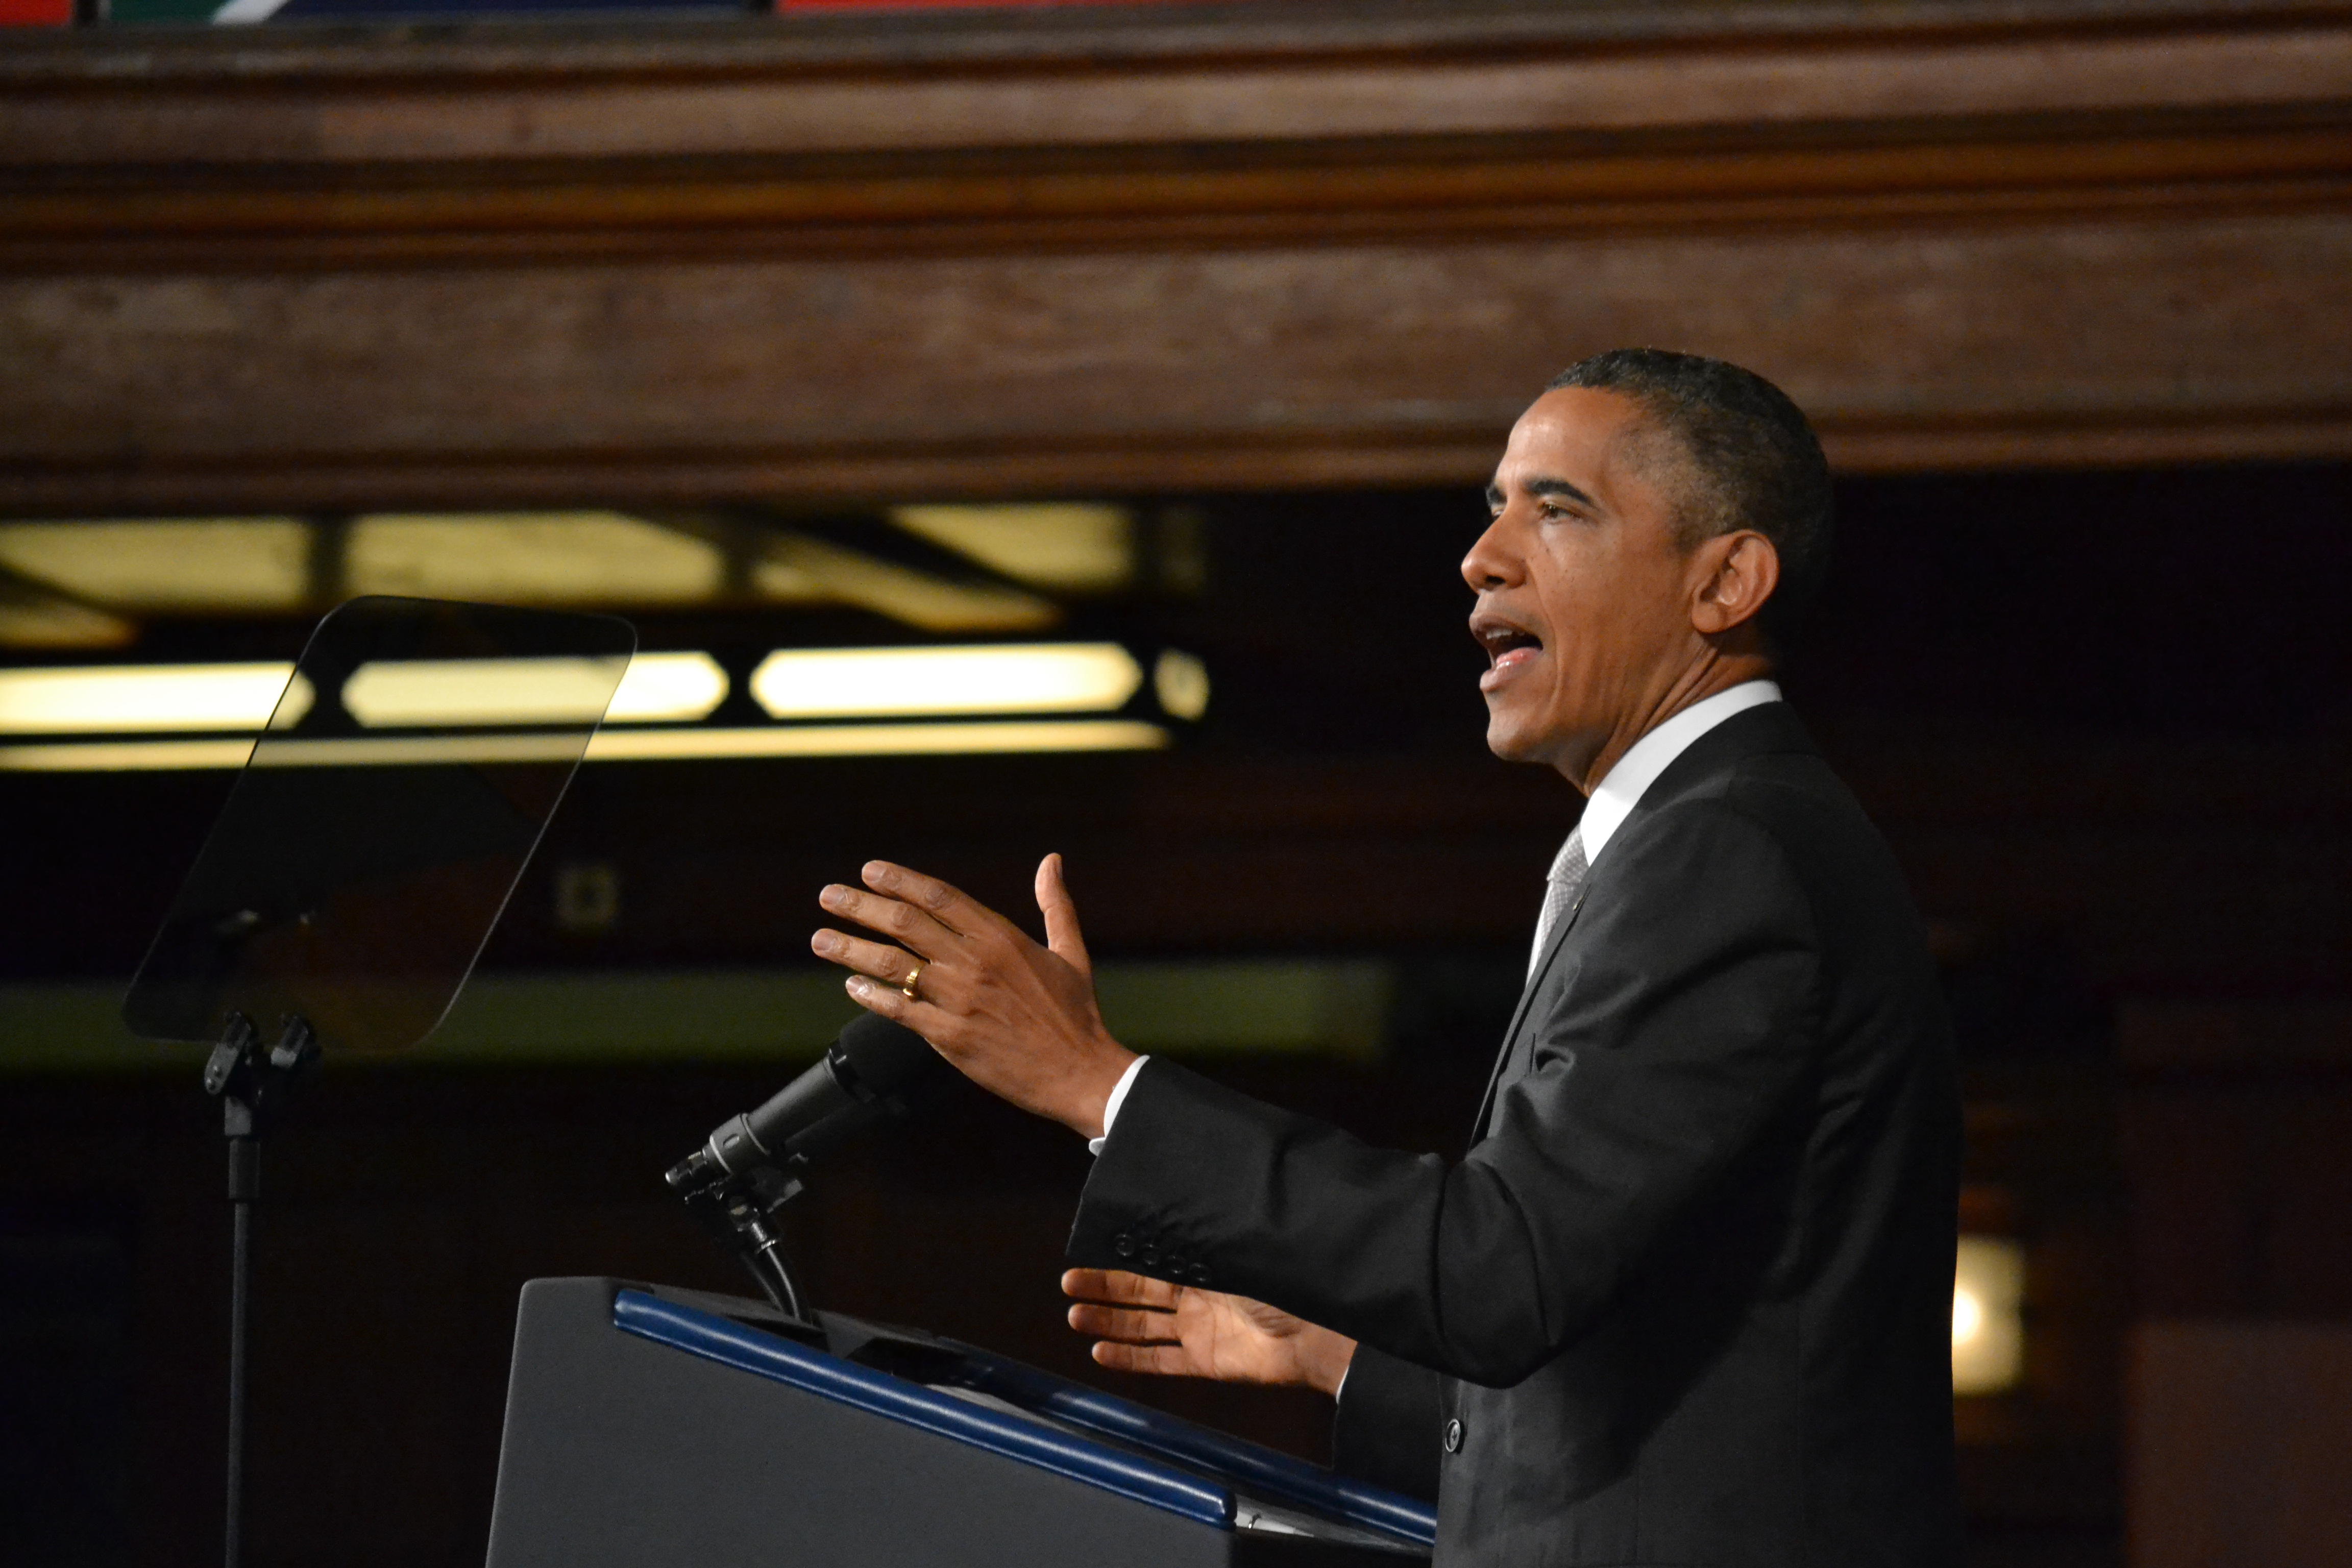 NEWS24: President Obama speaks at University of Cape Town